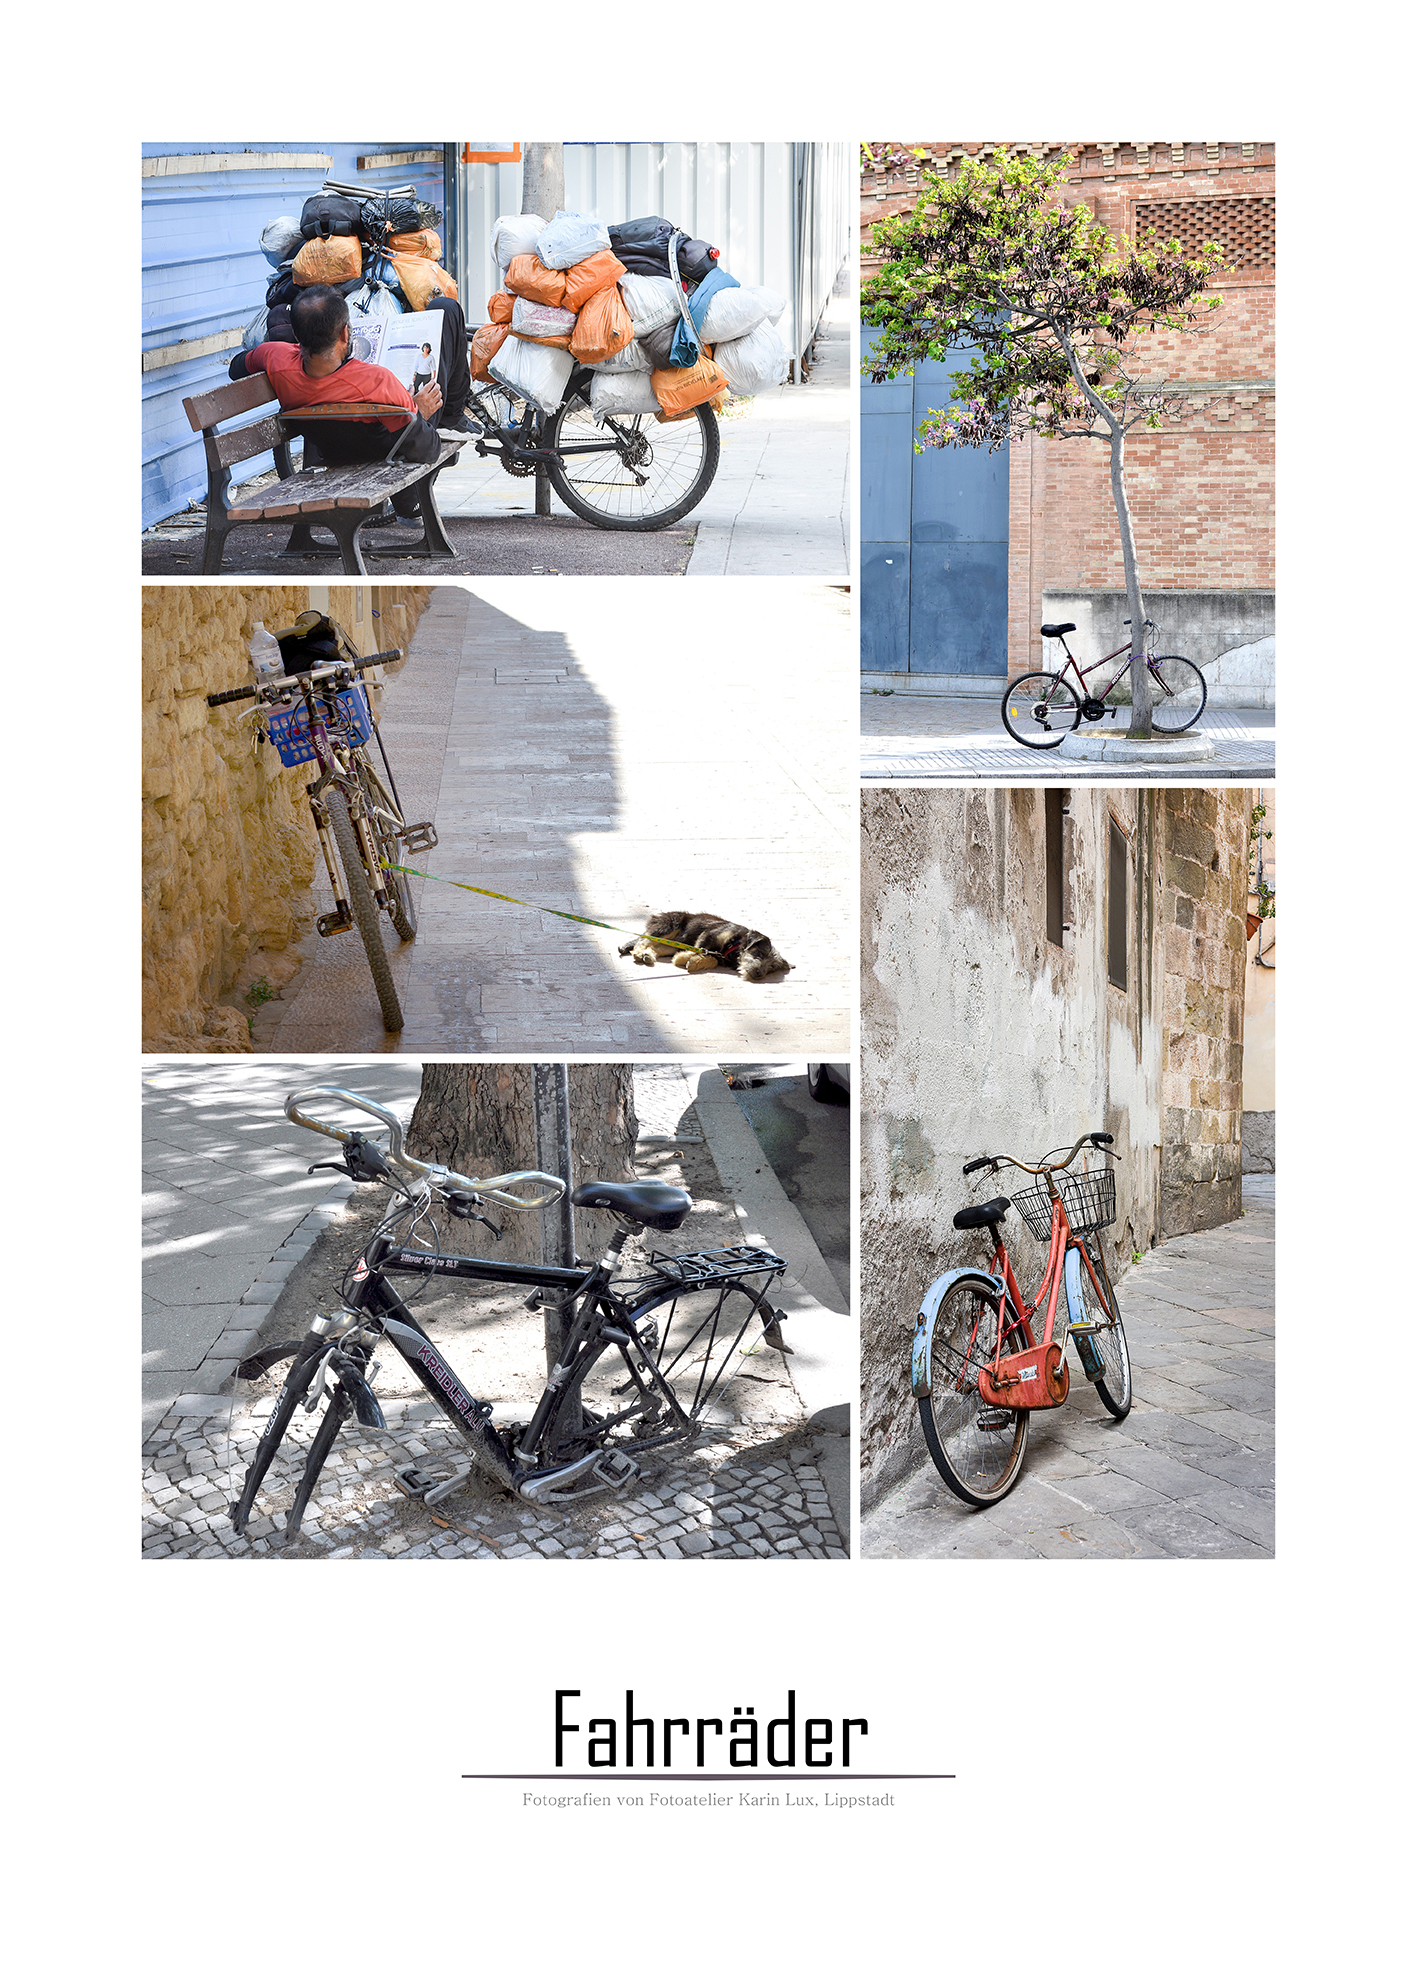 Fahrräder Collage